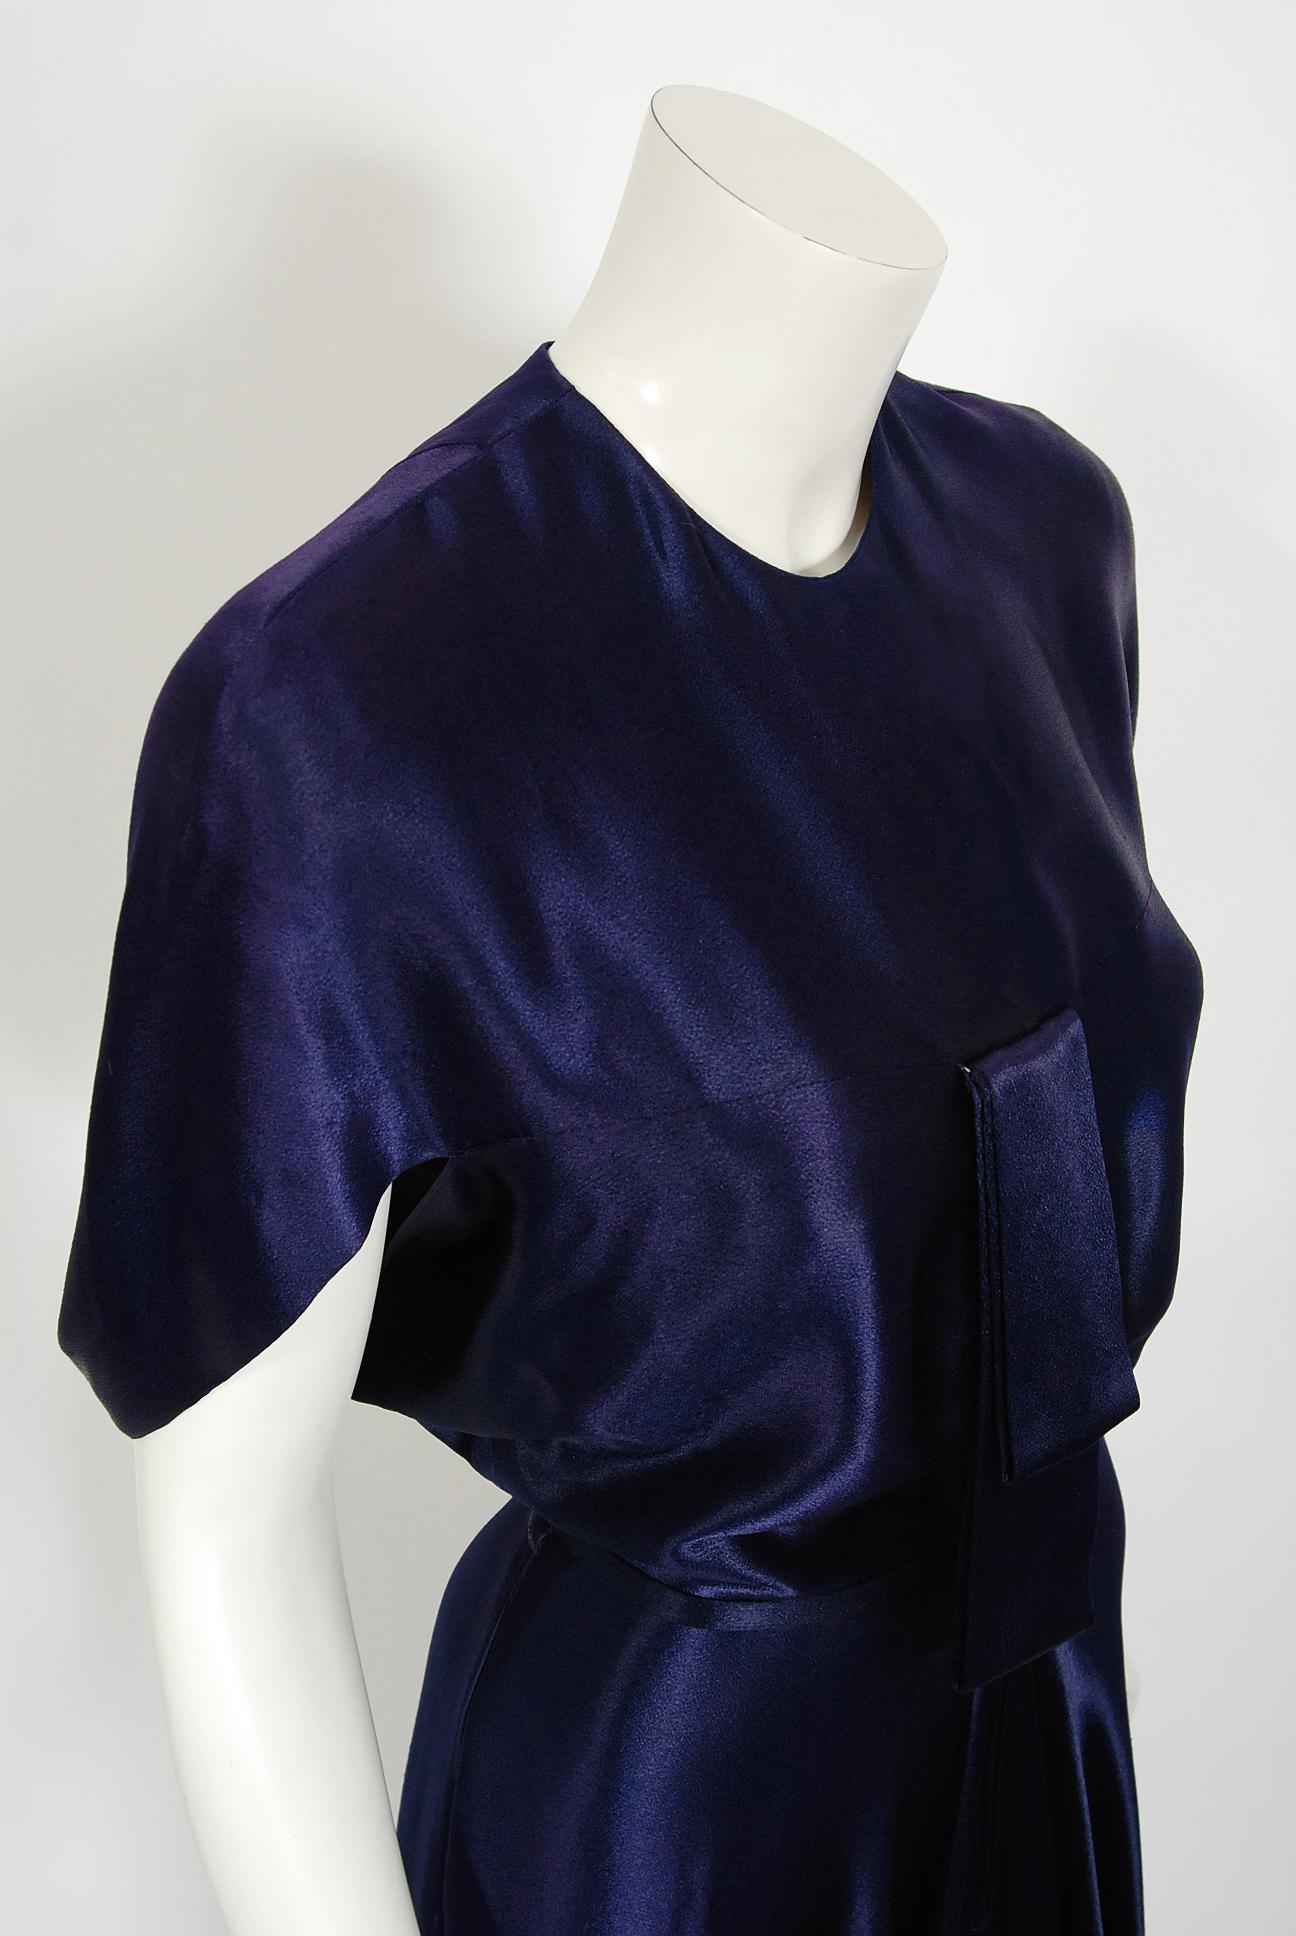 1948 Herbert Sondheim Documented Midnight-Blue Silk Satin Draped Sleeve Dress  1